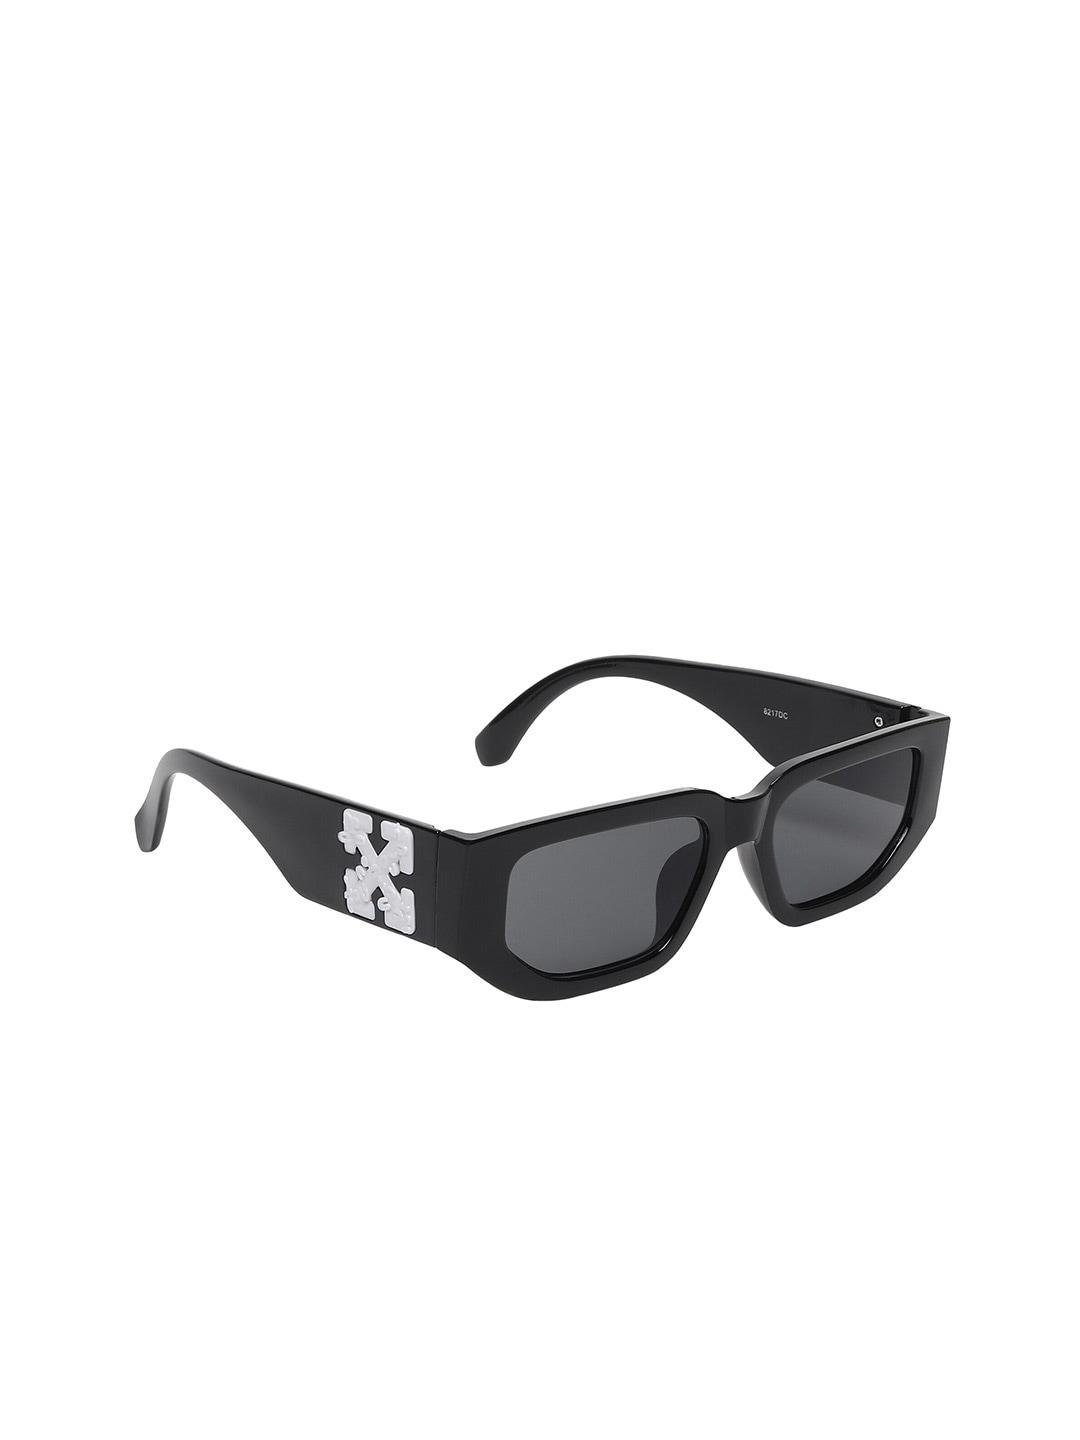 Swiss Design Unisex Square Sunglasses with UV Protected Lens